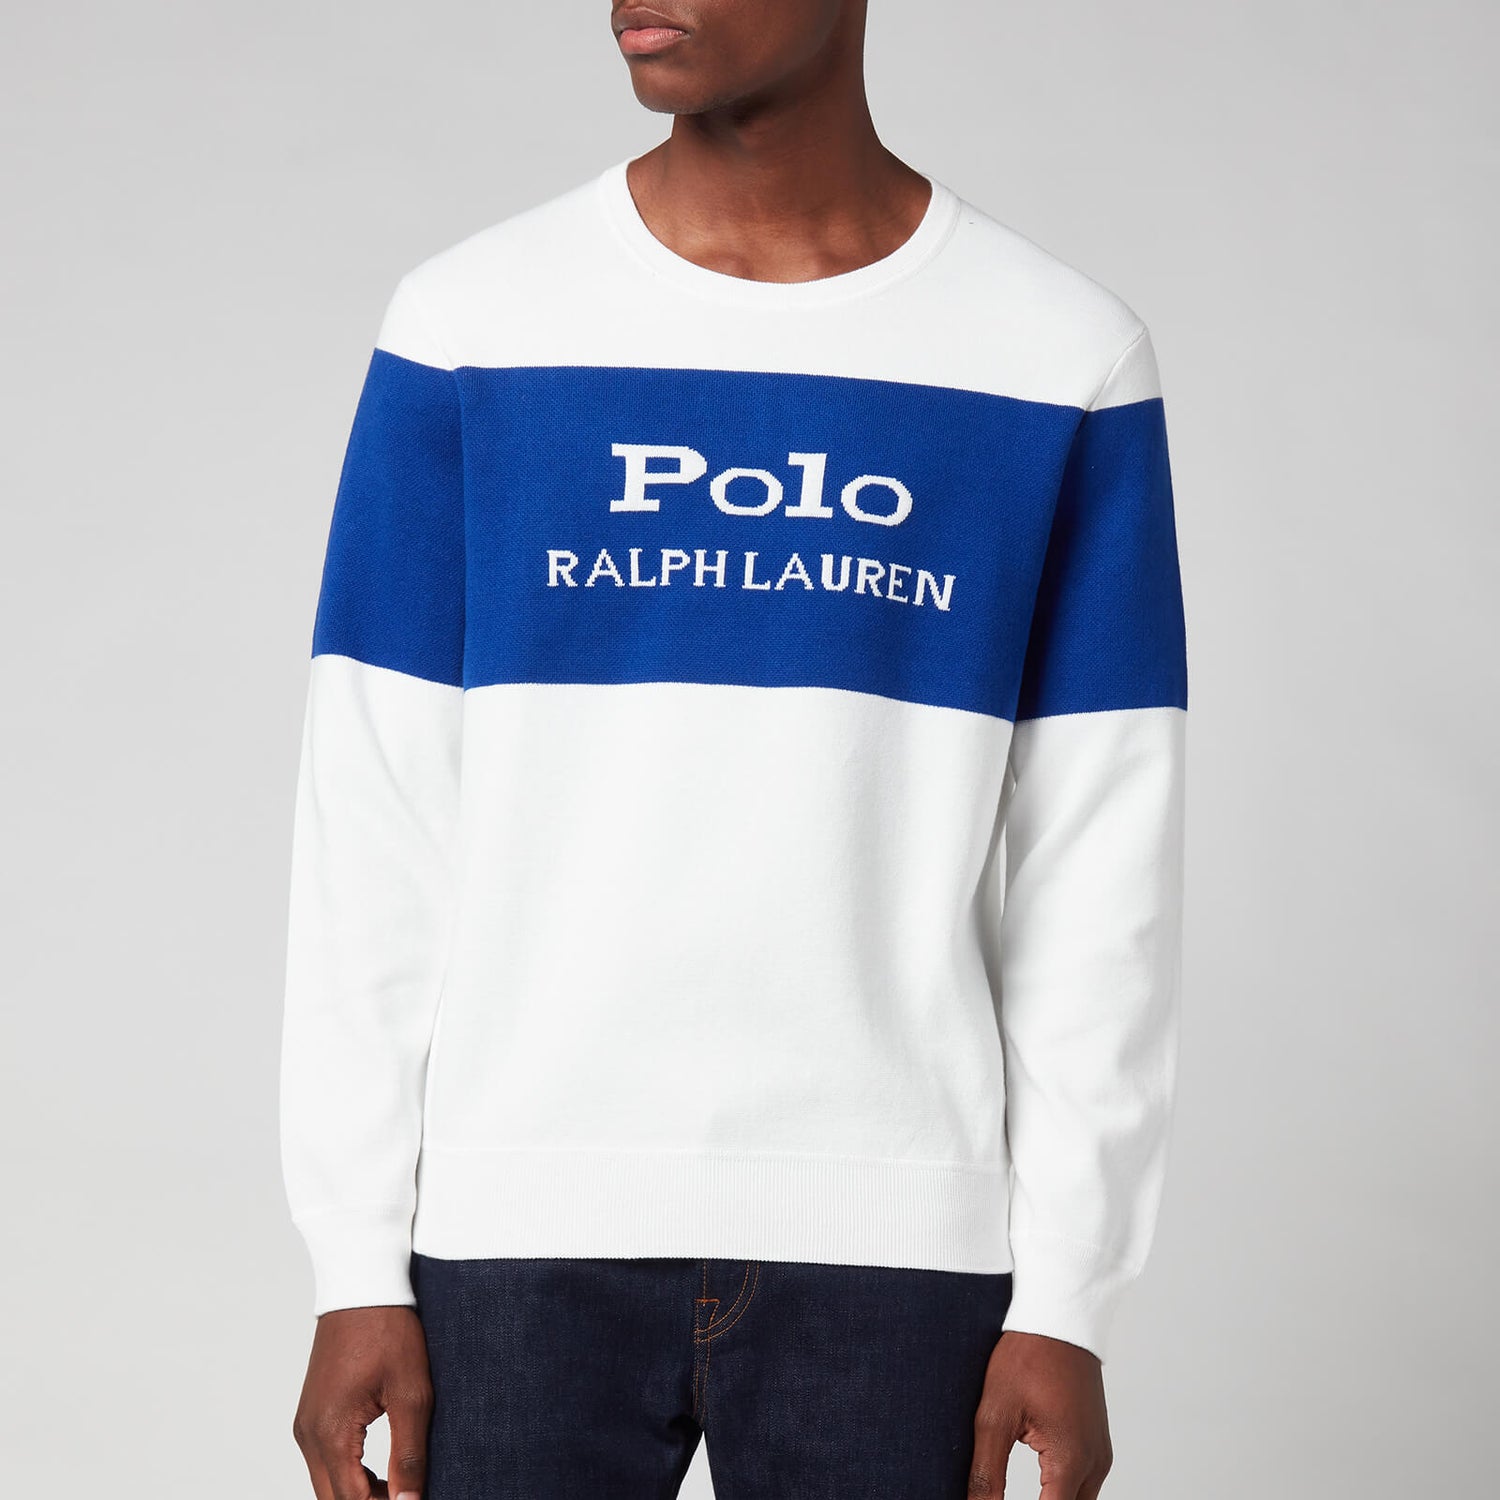 Polo Ralph Lauren Men's Stripe Crewneck Sweatshirt - White